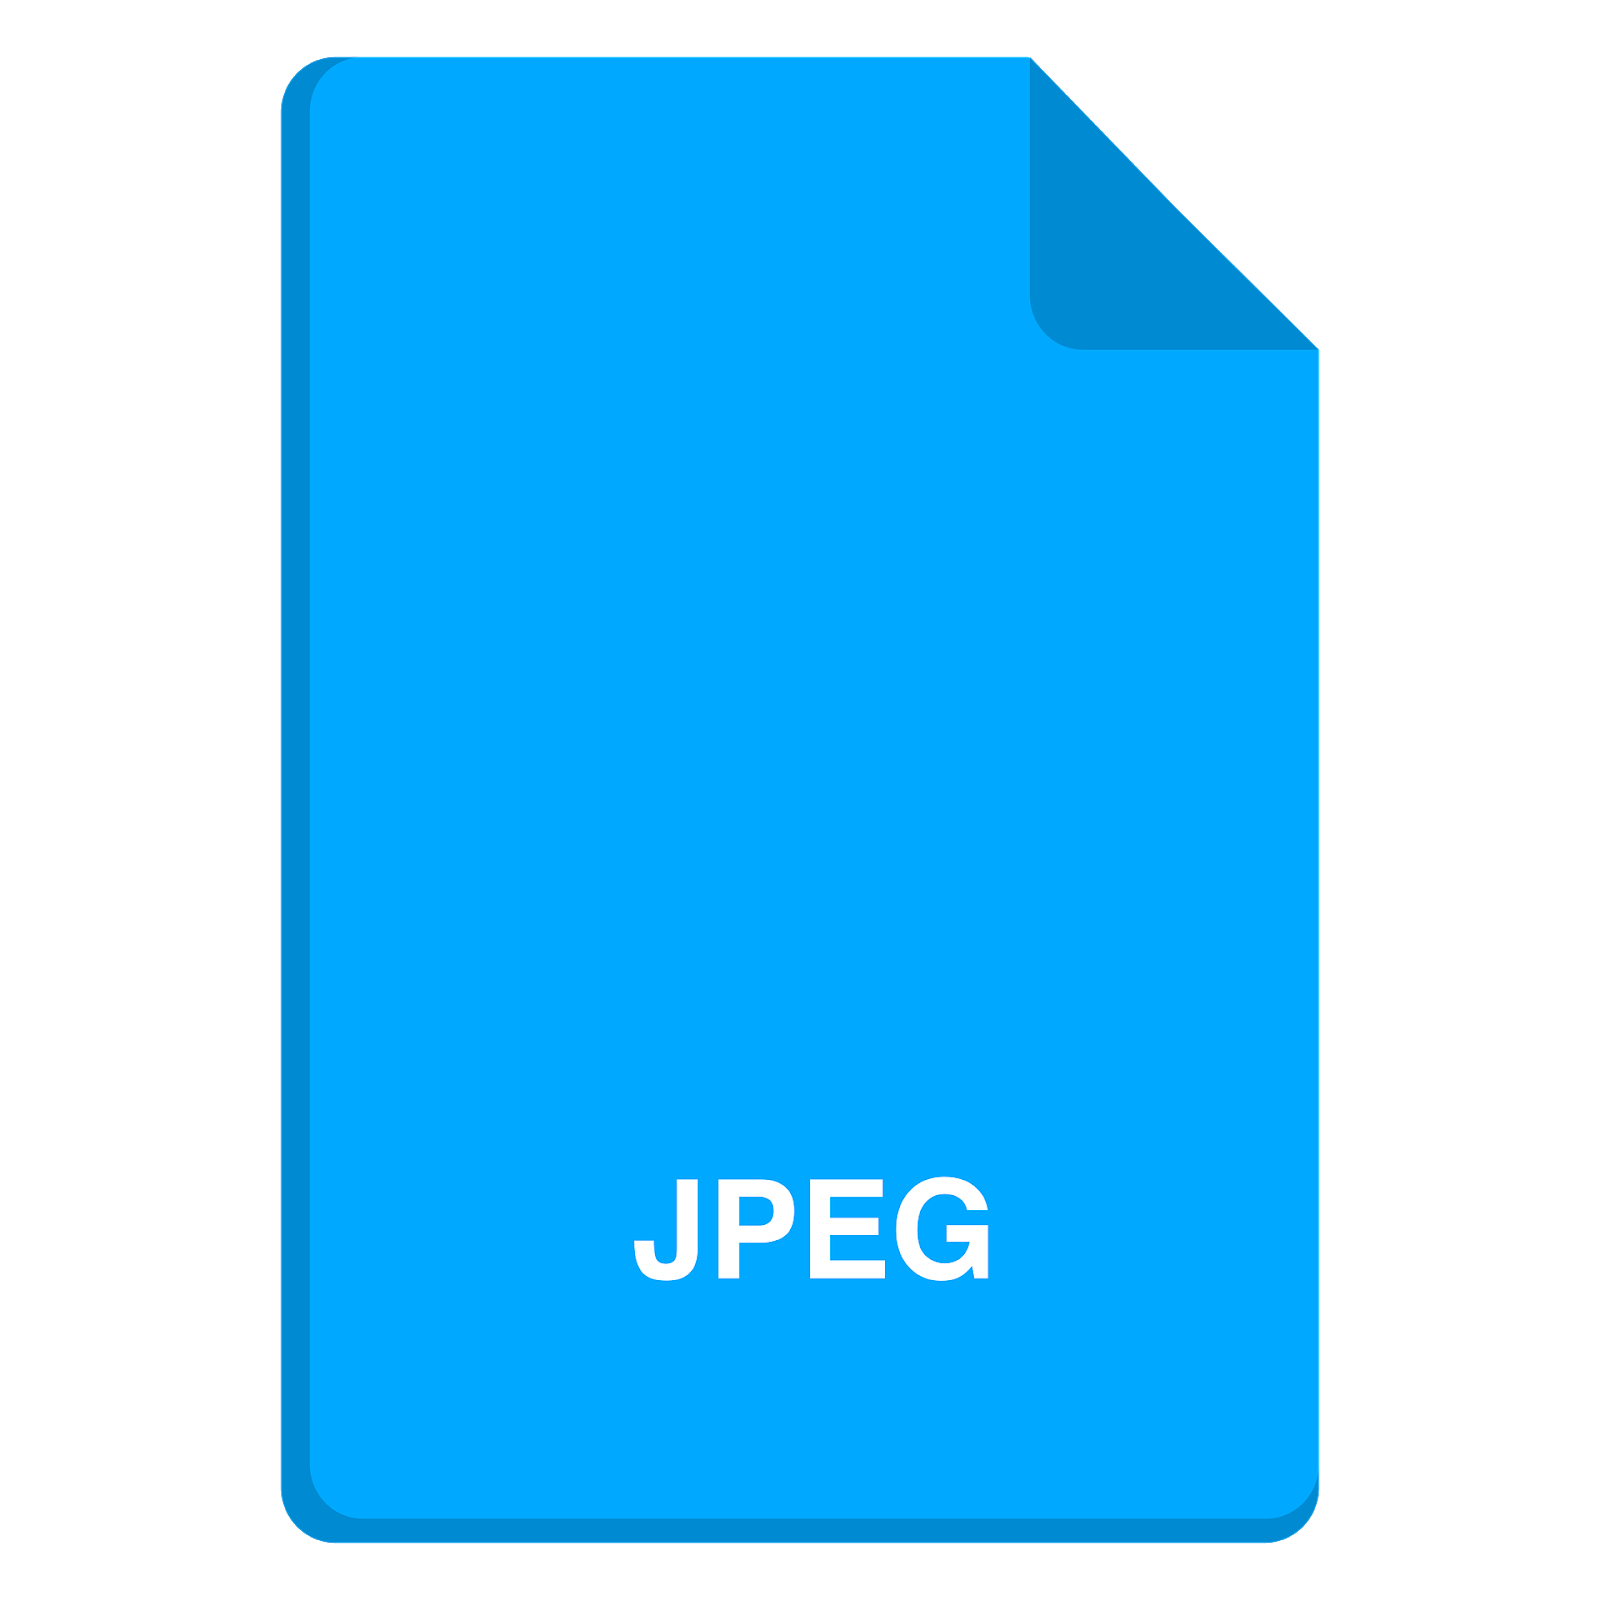 File format not support. Иконка файла. Иконка графического файла. Файл jpeg. Графический файл jpg.